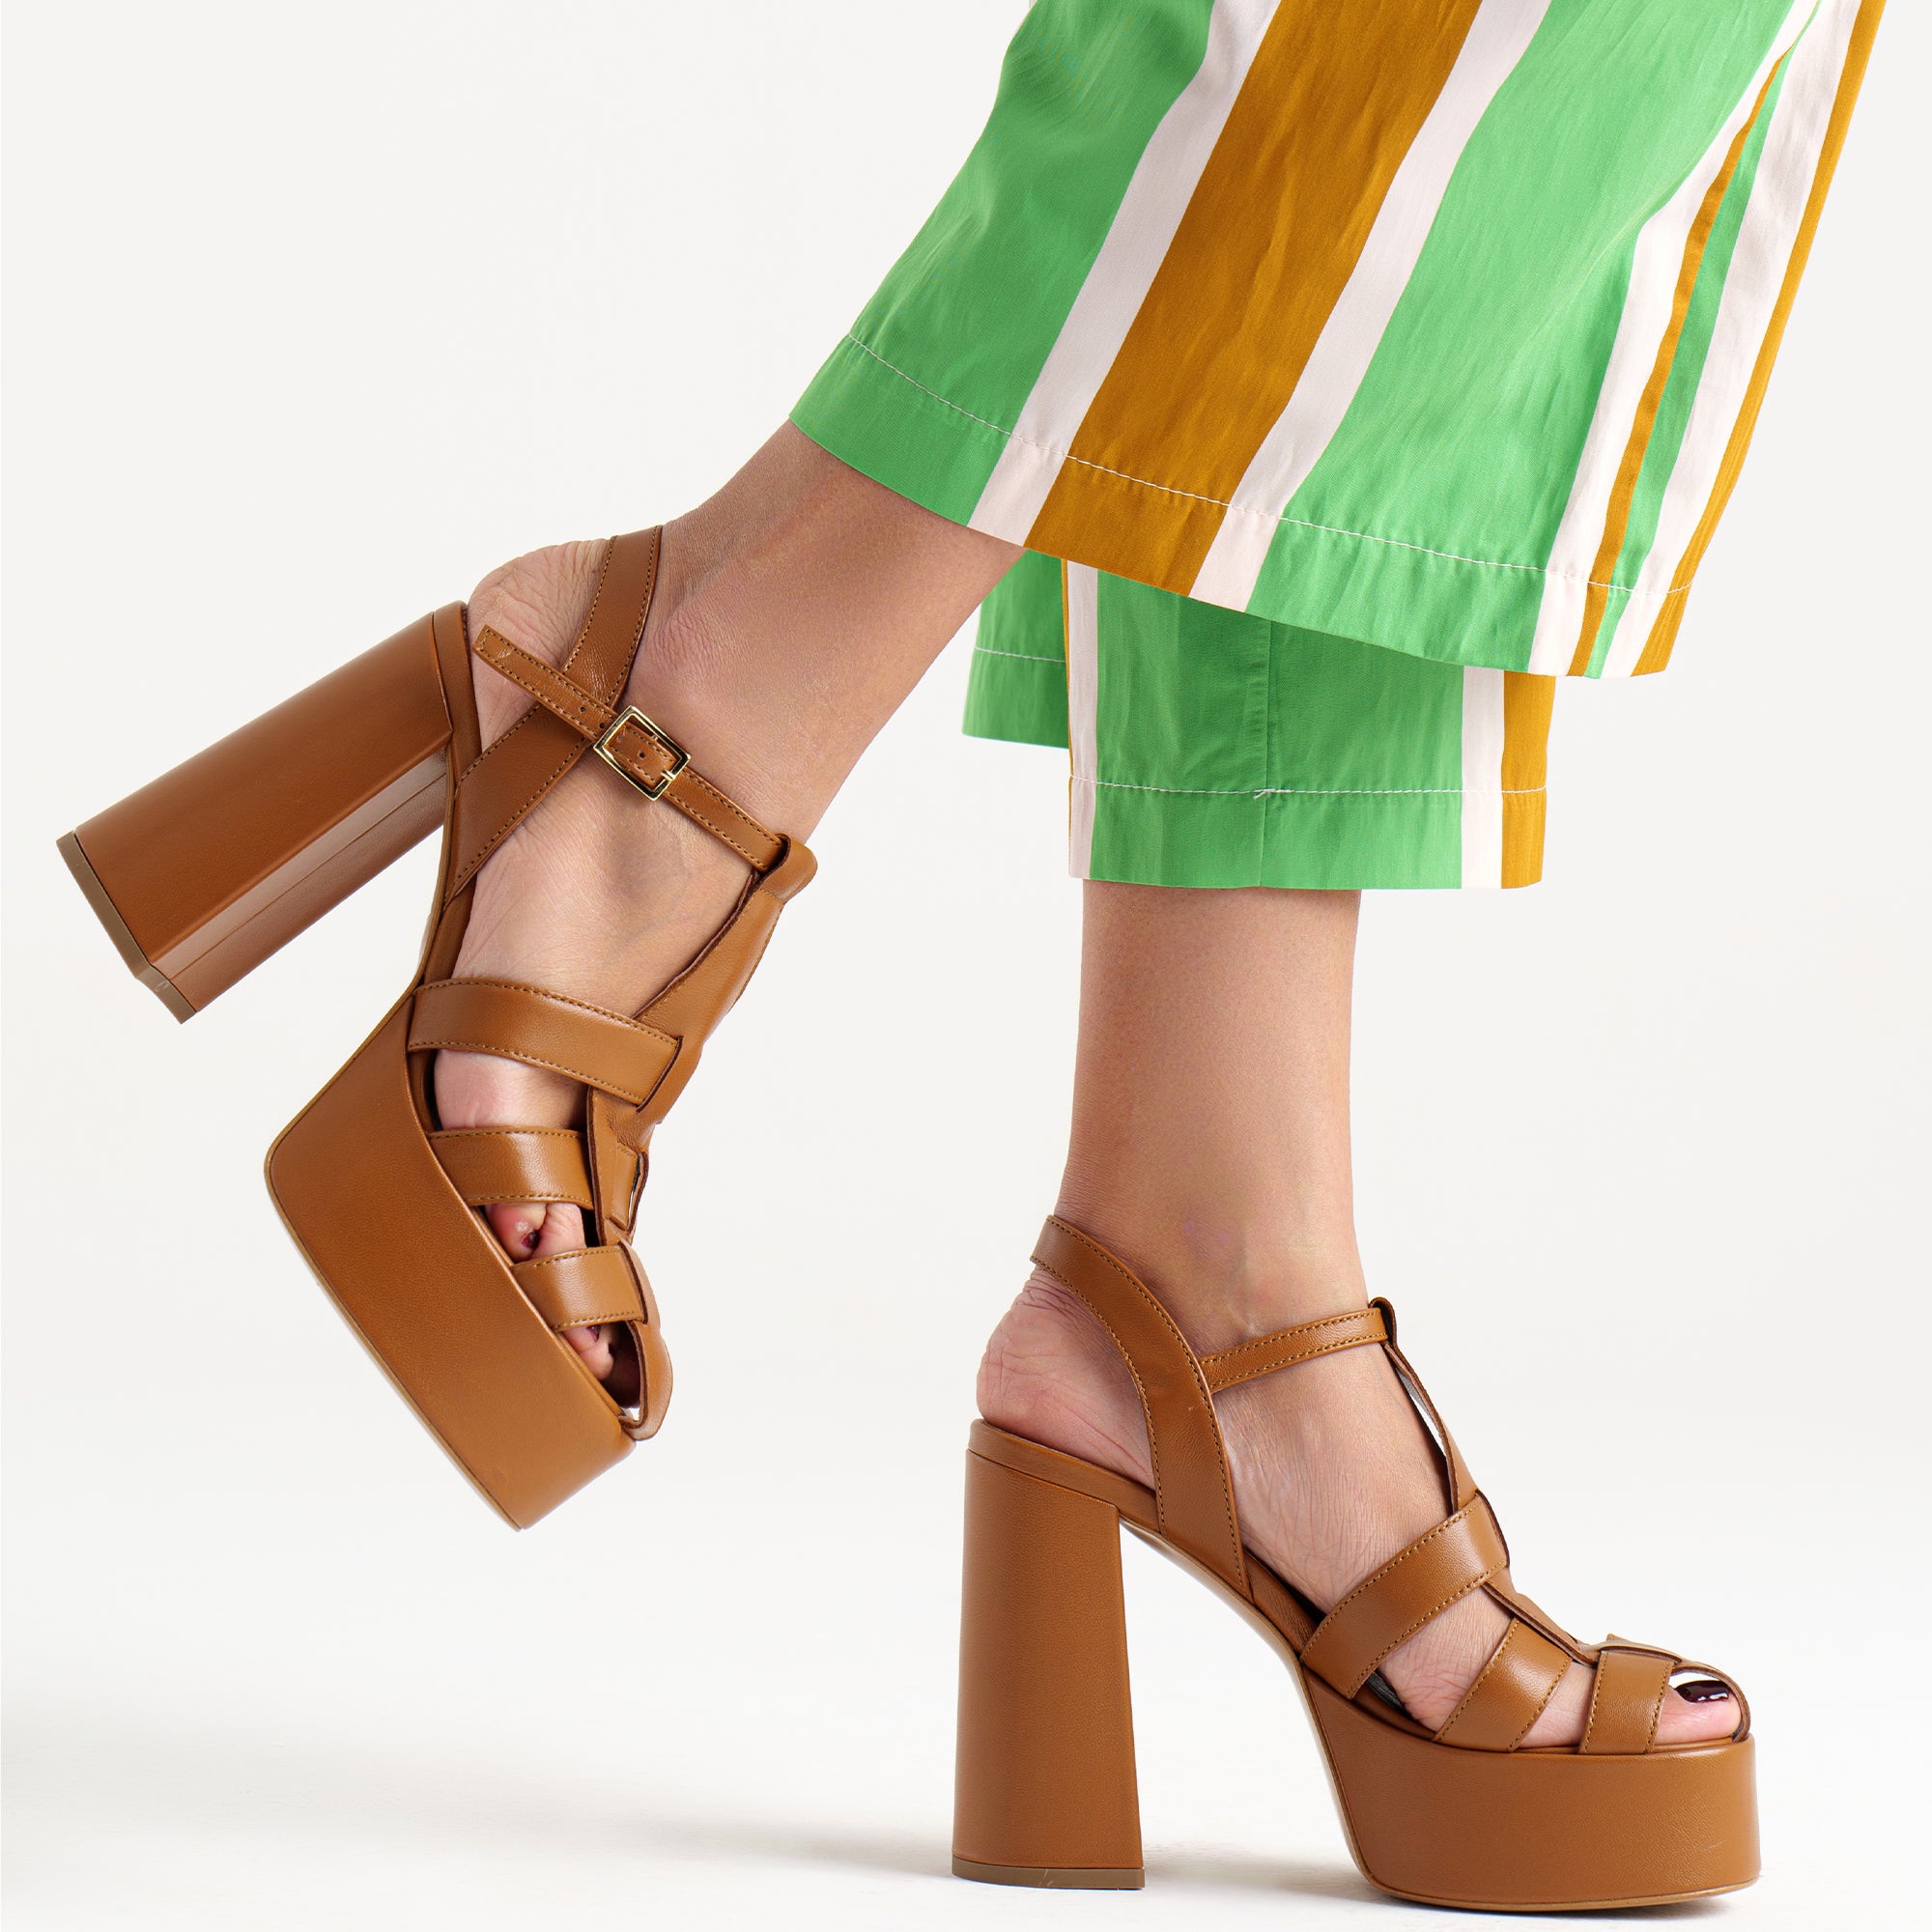 Greta cage model sandal on platform and wide heel in tan leather